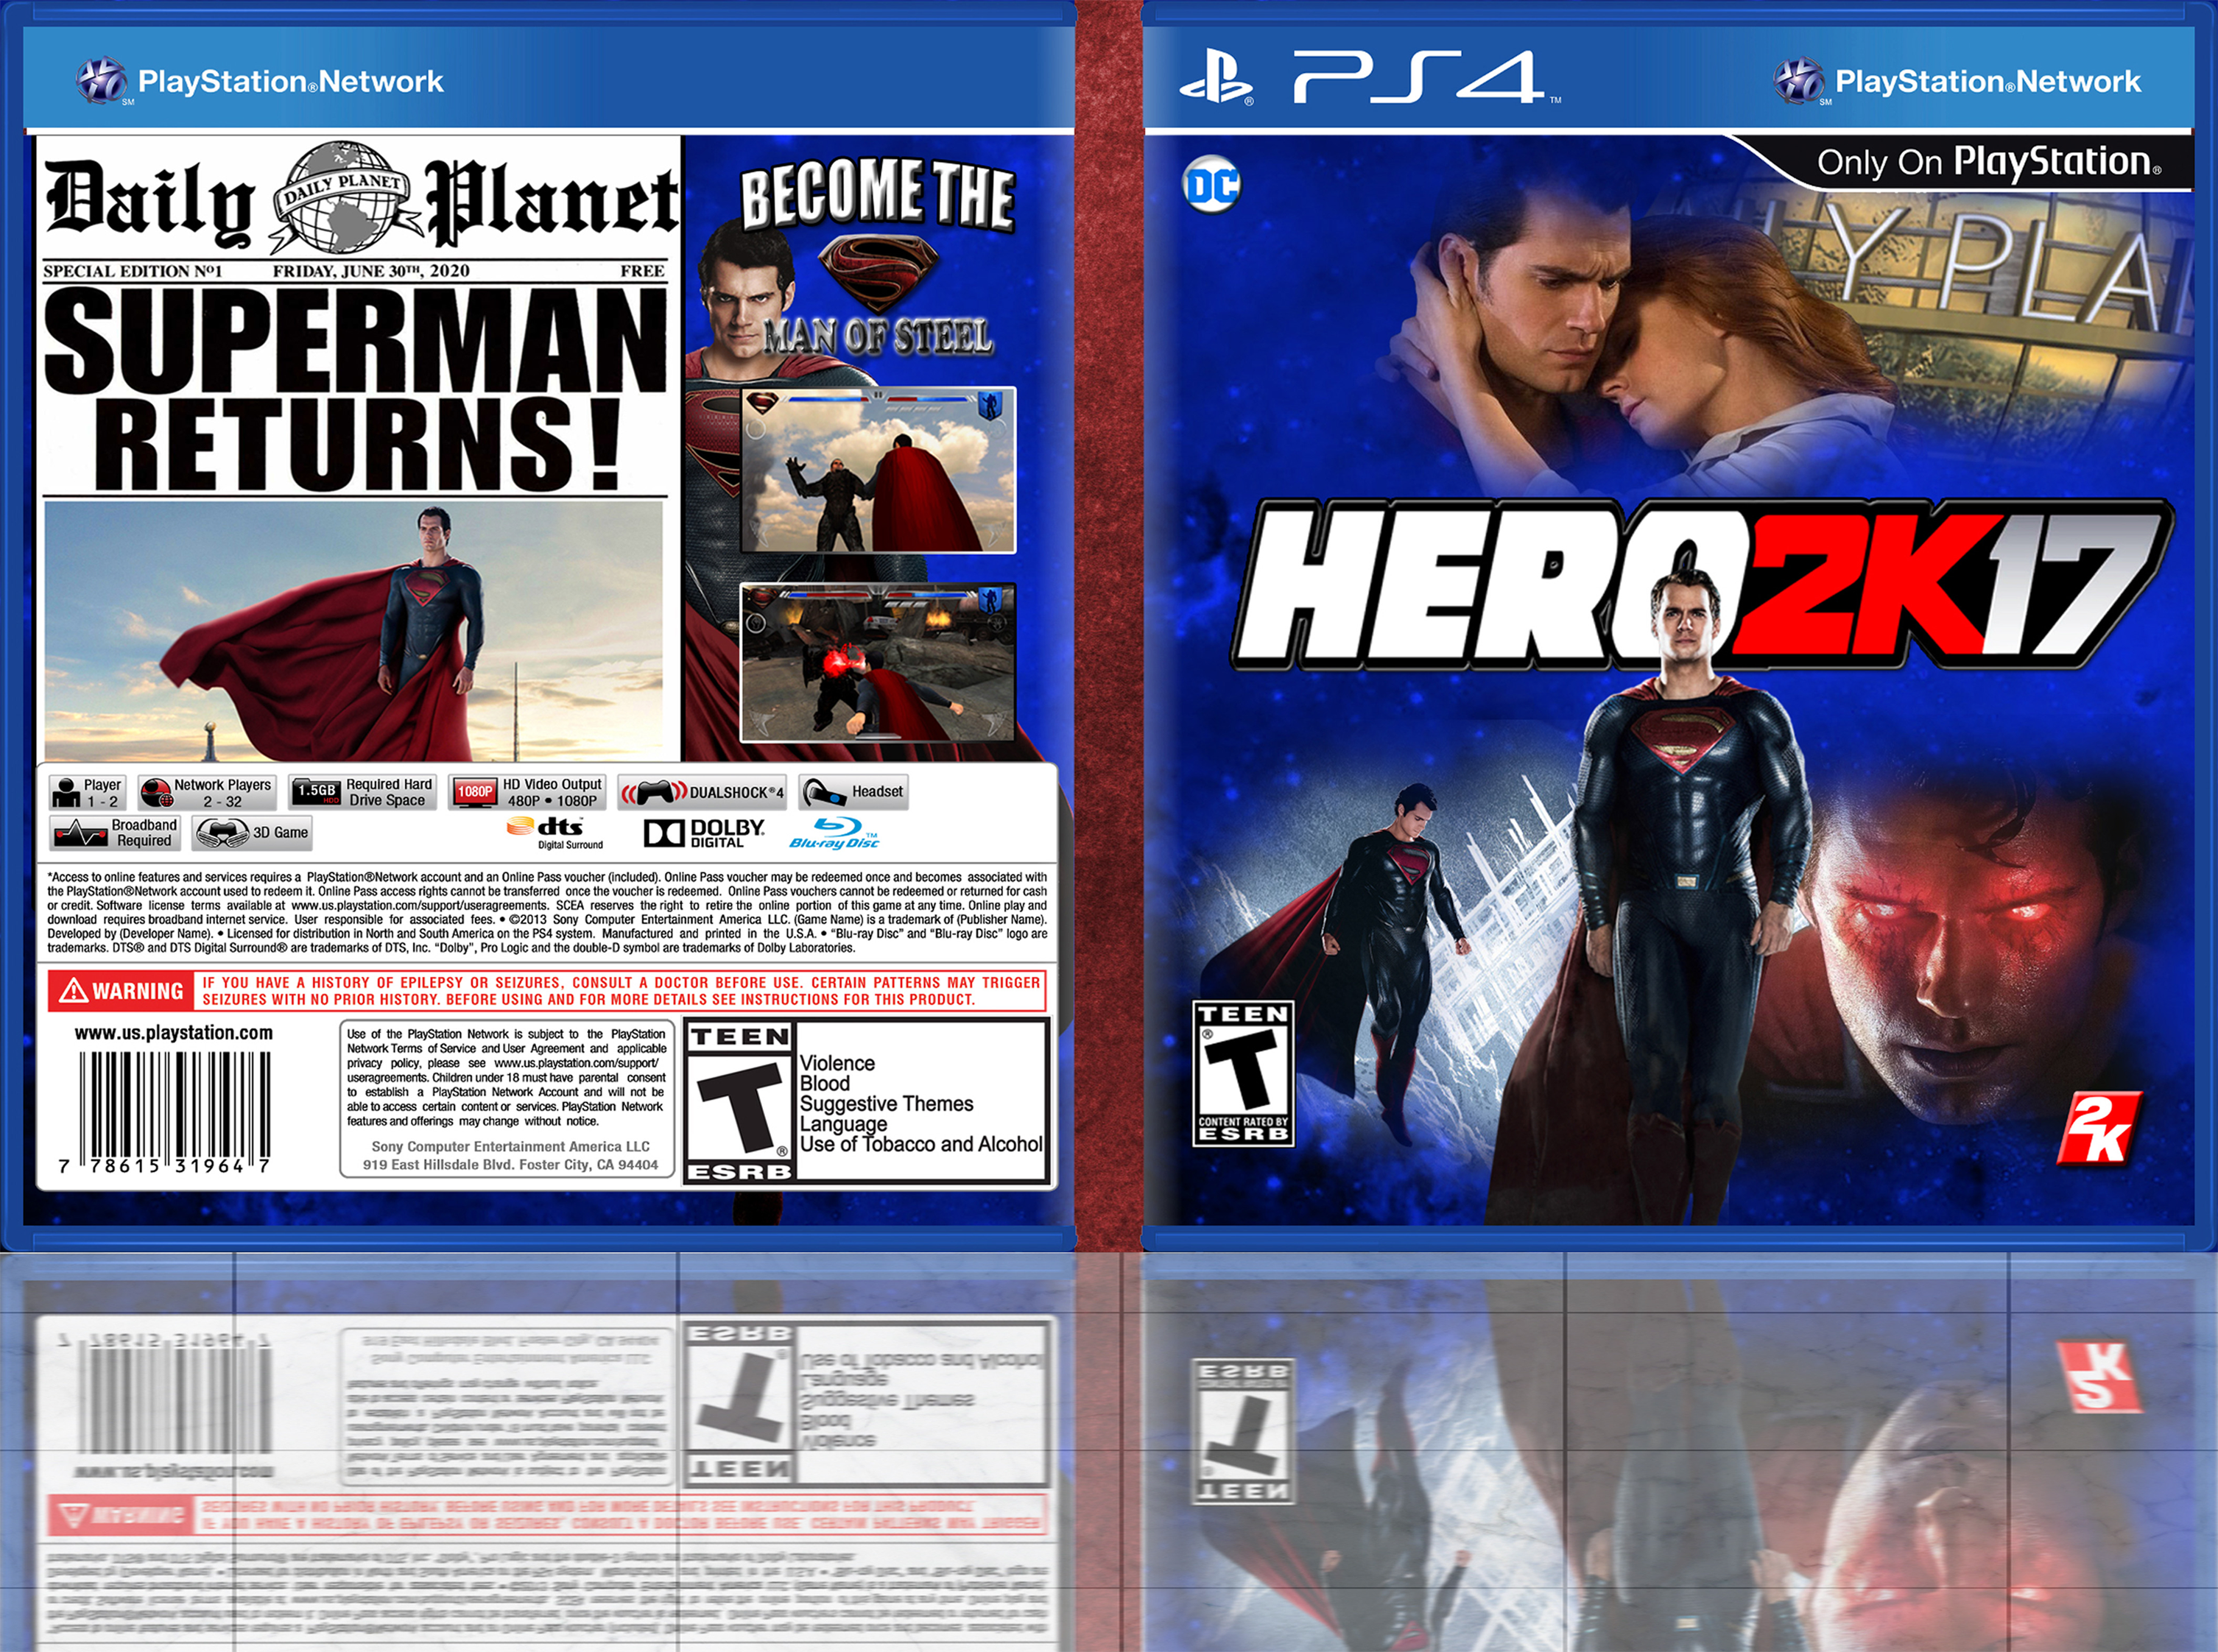 Hero2k ft. Superman box cover